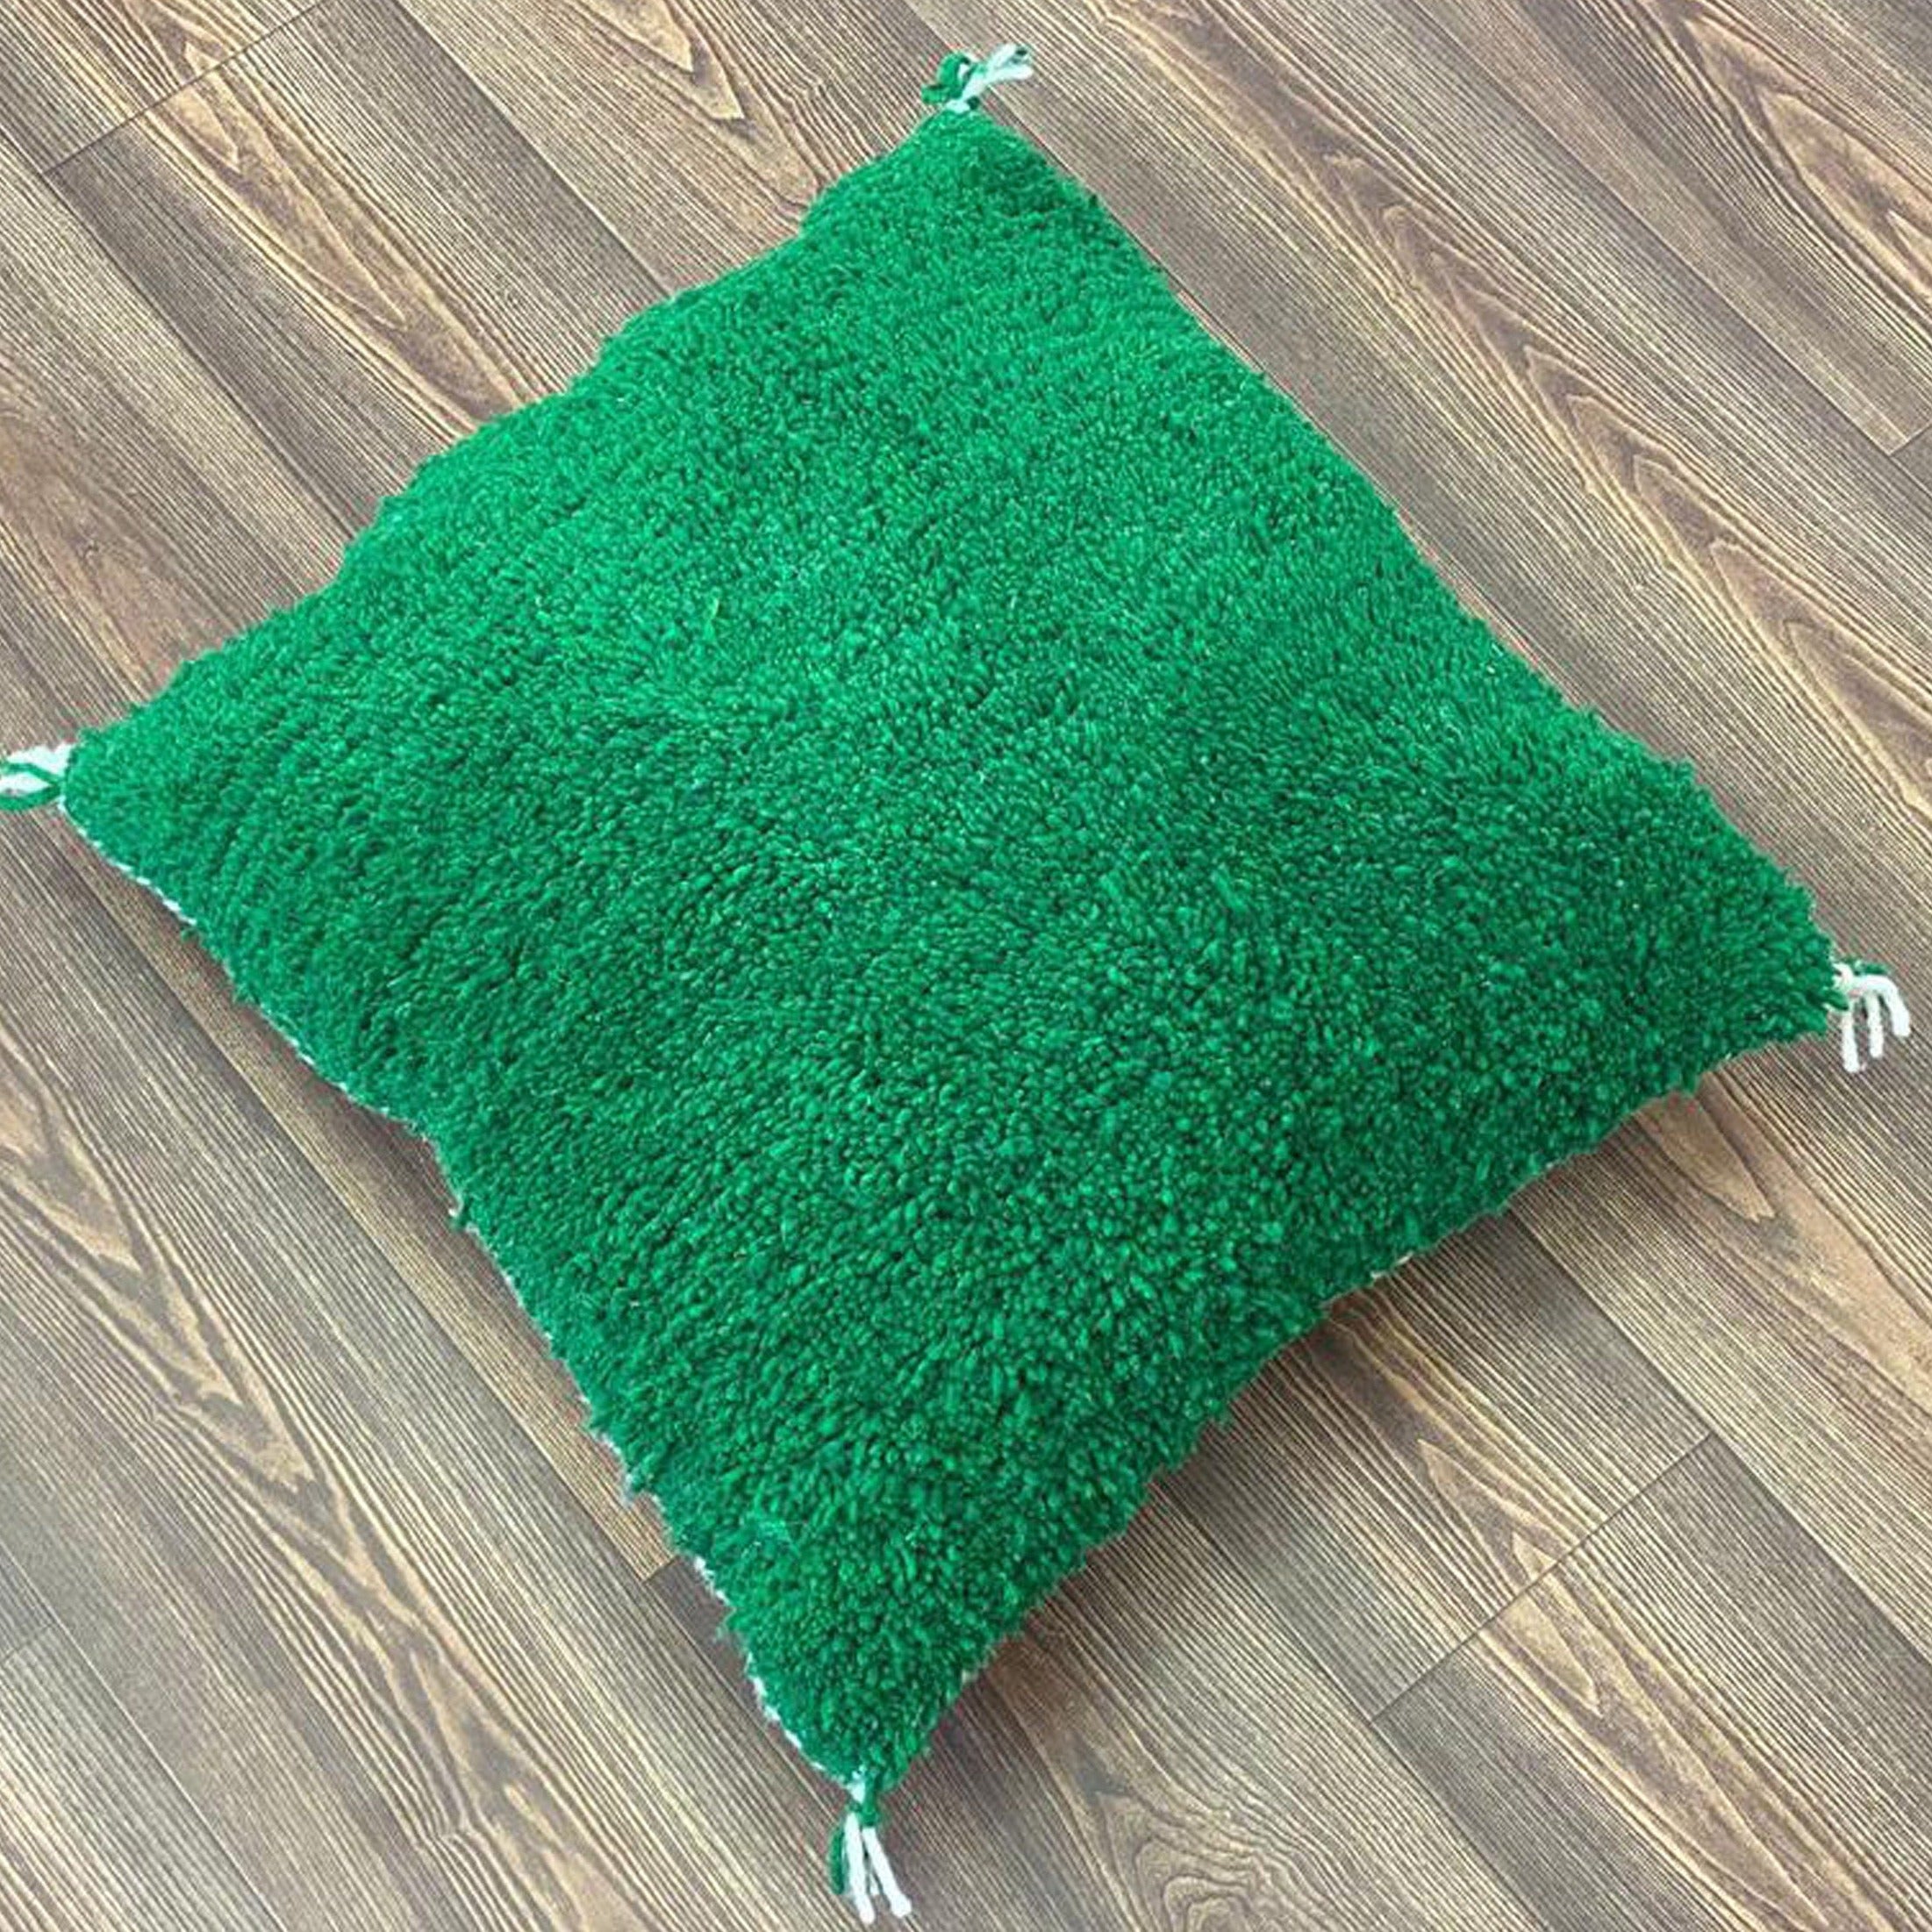 Berber Cushion Green | Cozy Decor Accent